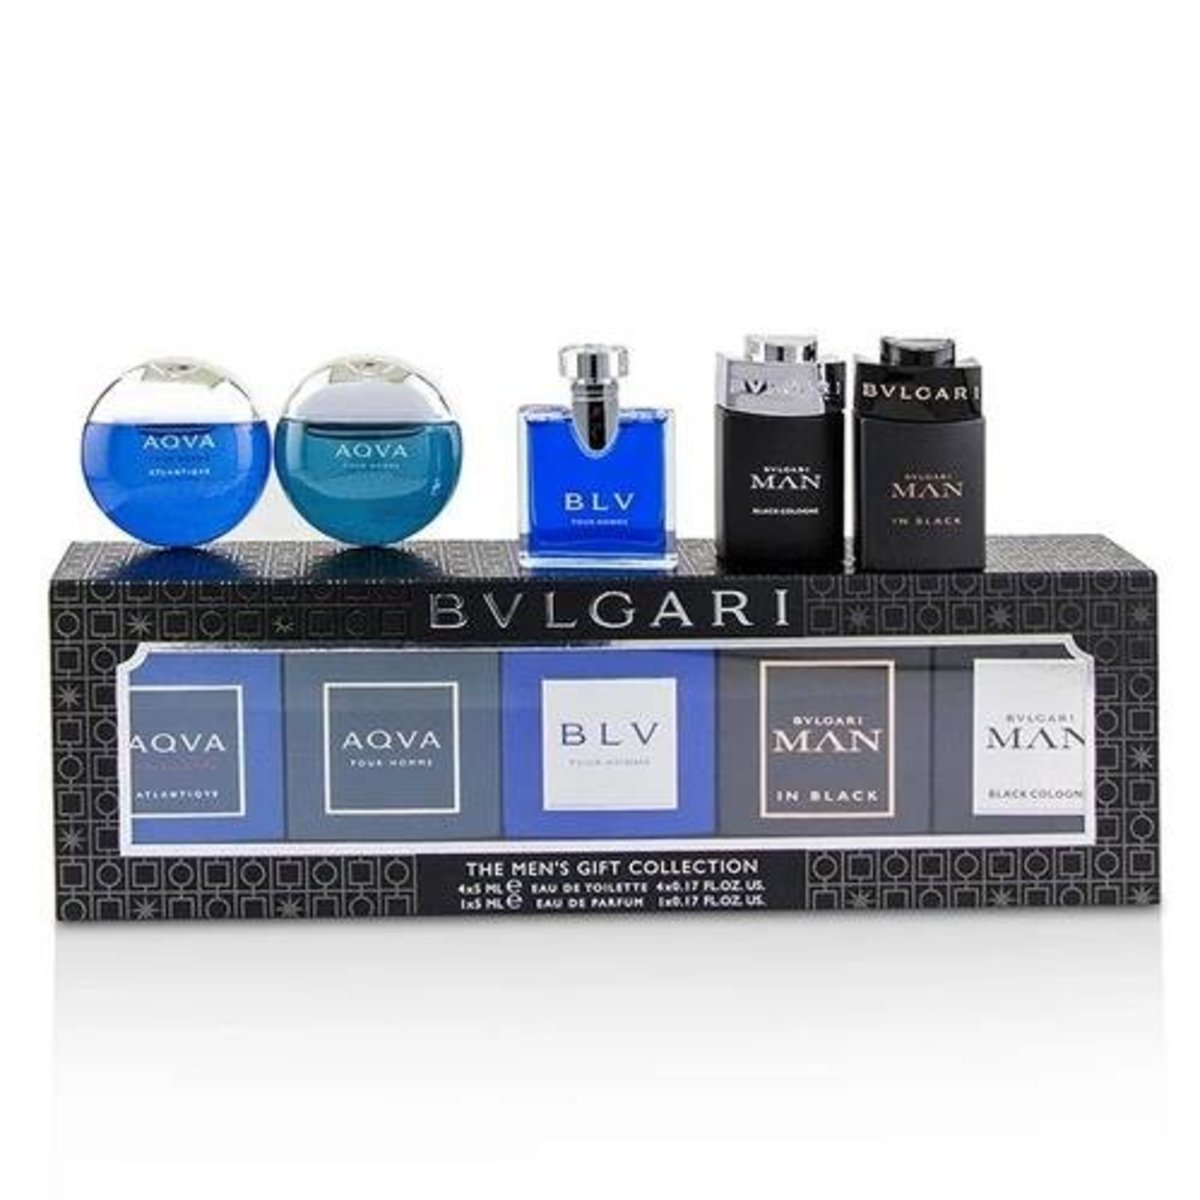 bvlgari men's gift collection